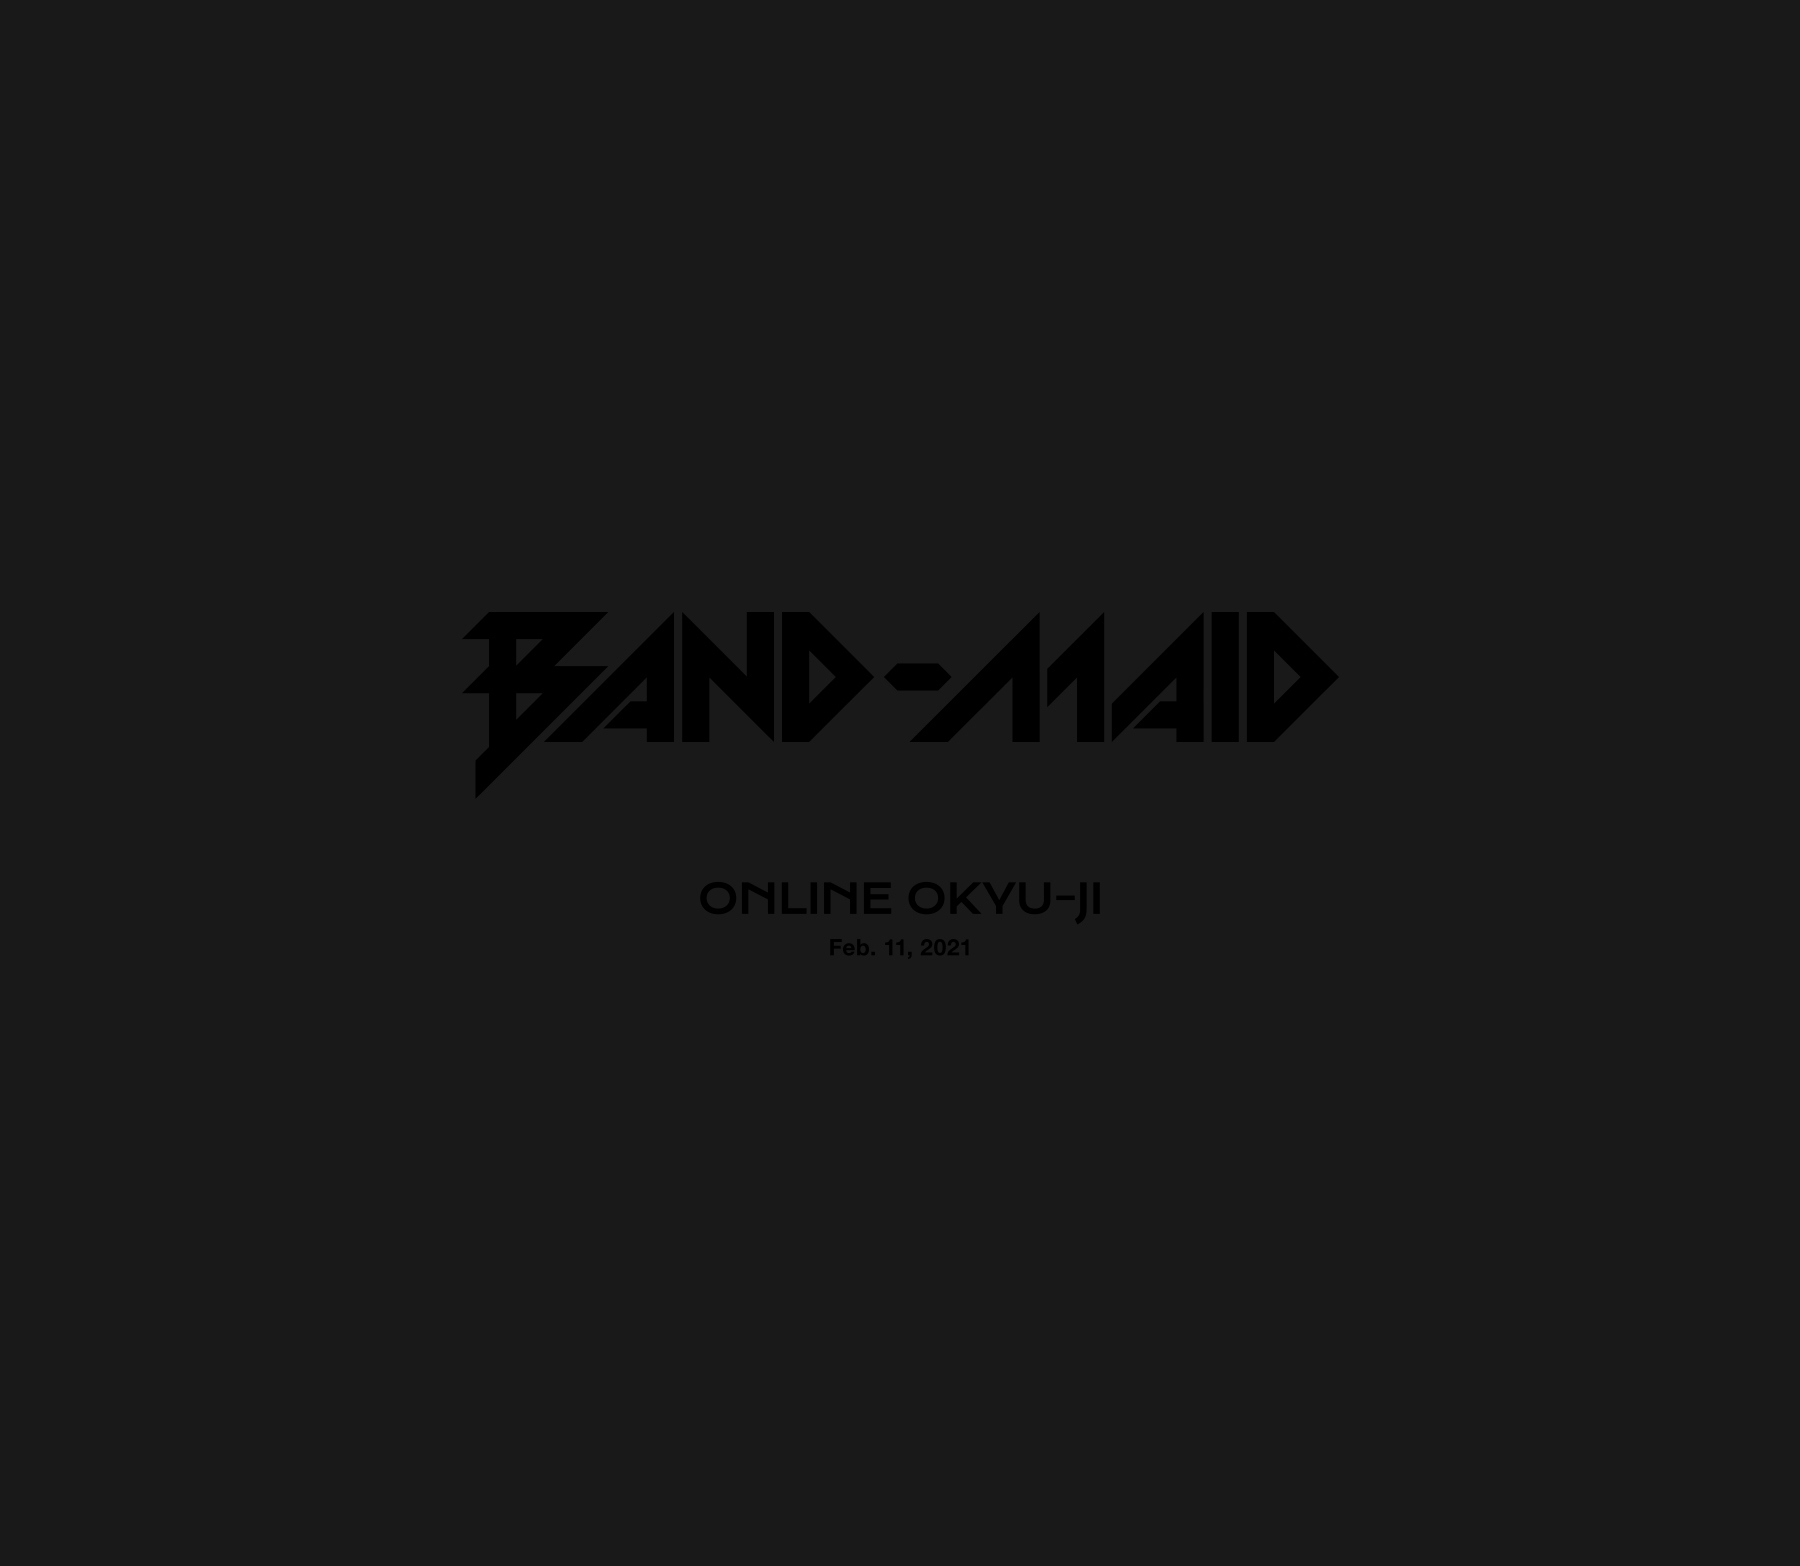 News Update No God 公開 Blu Ray Dvd Band Maid Online Okyu Ji Feb 11 21 Band Maid Official Web Site